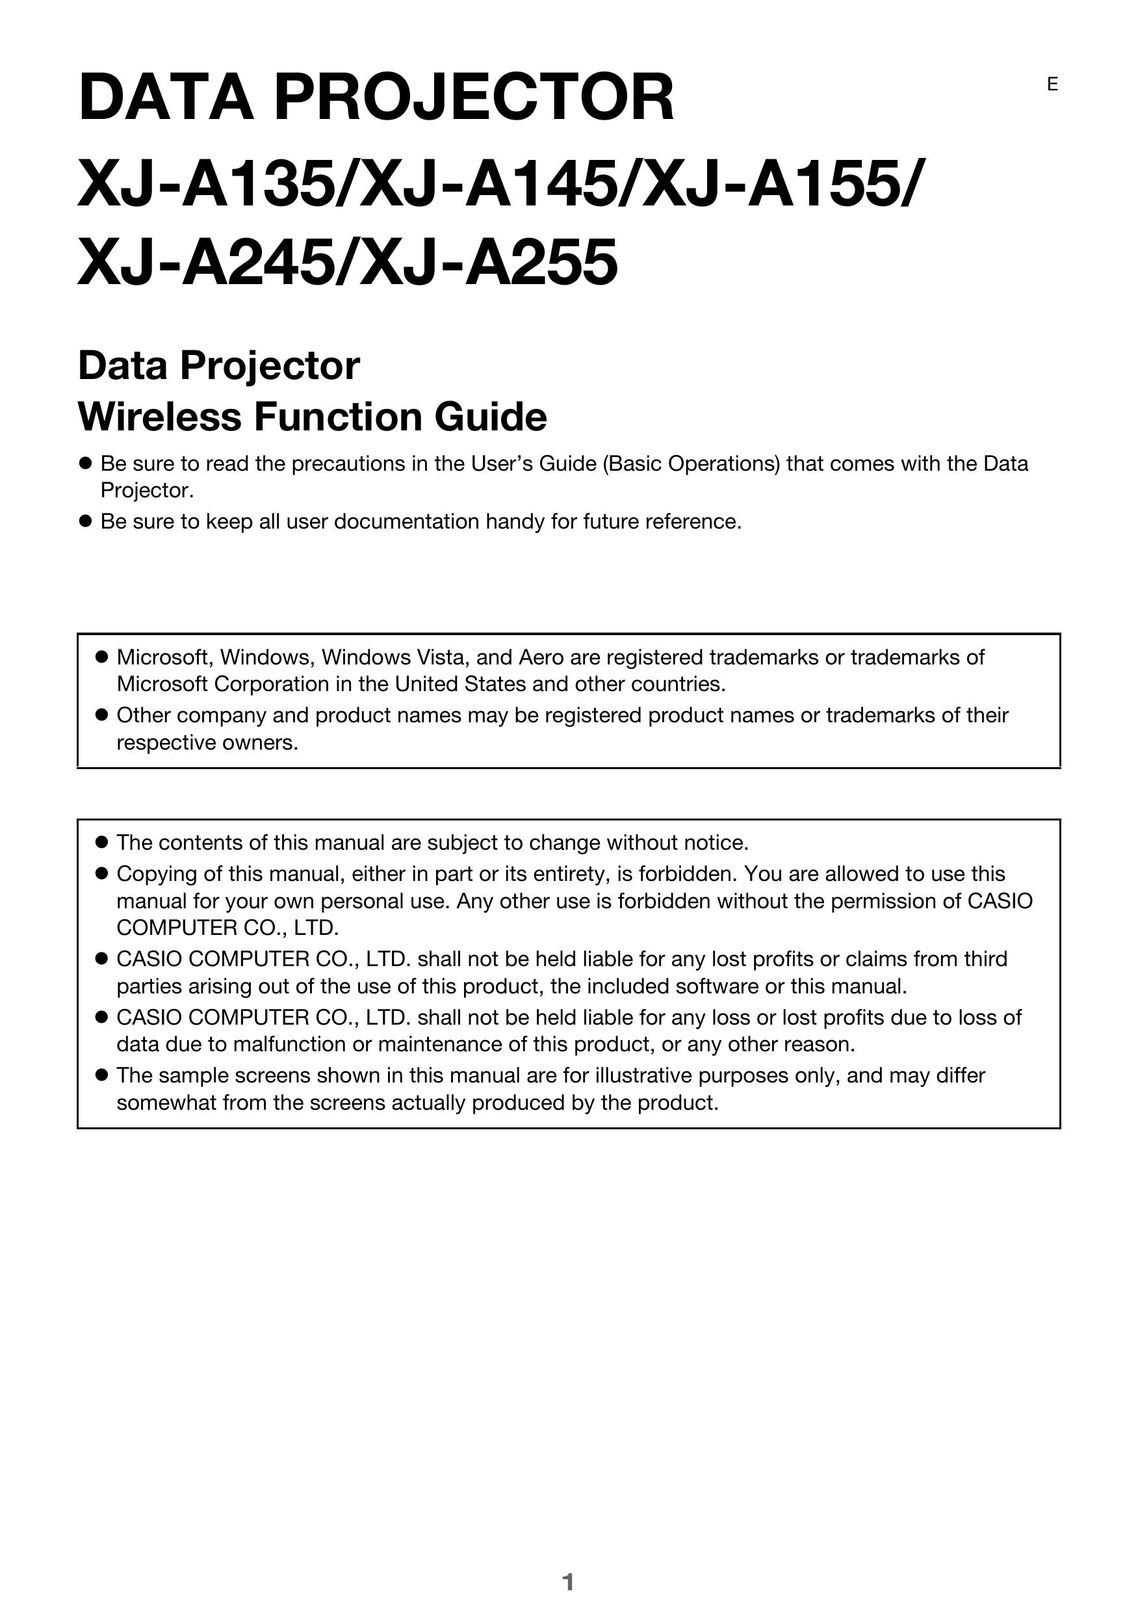 Casio XJ-A135 Projector User Manual